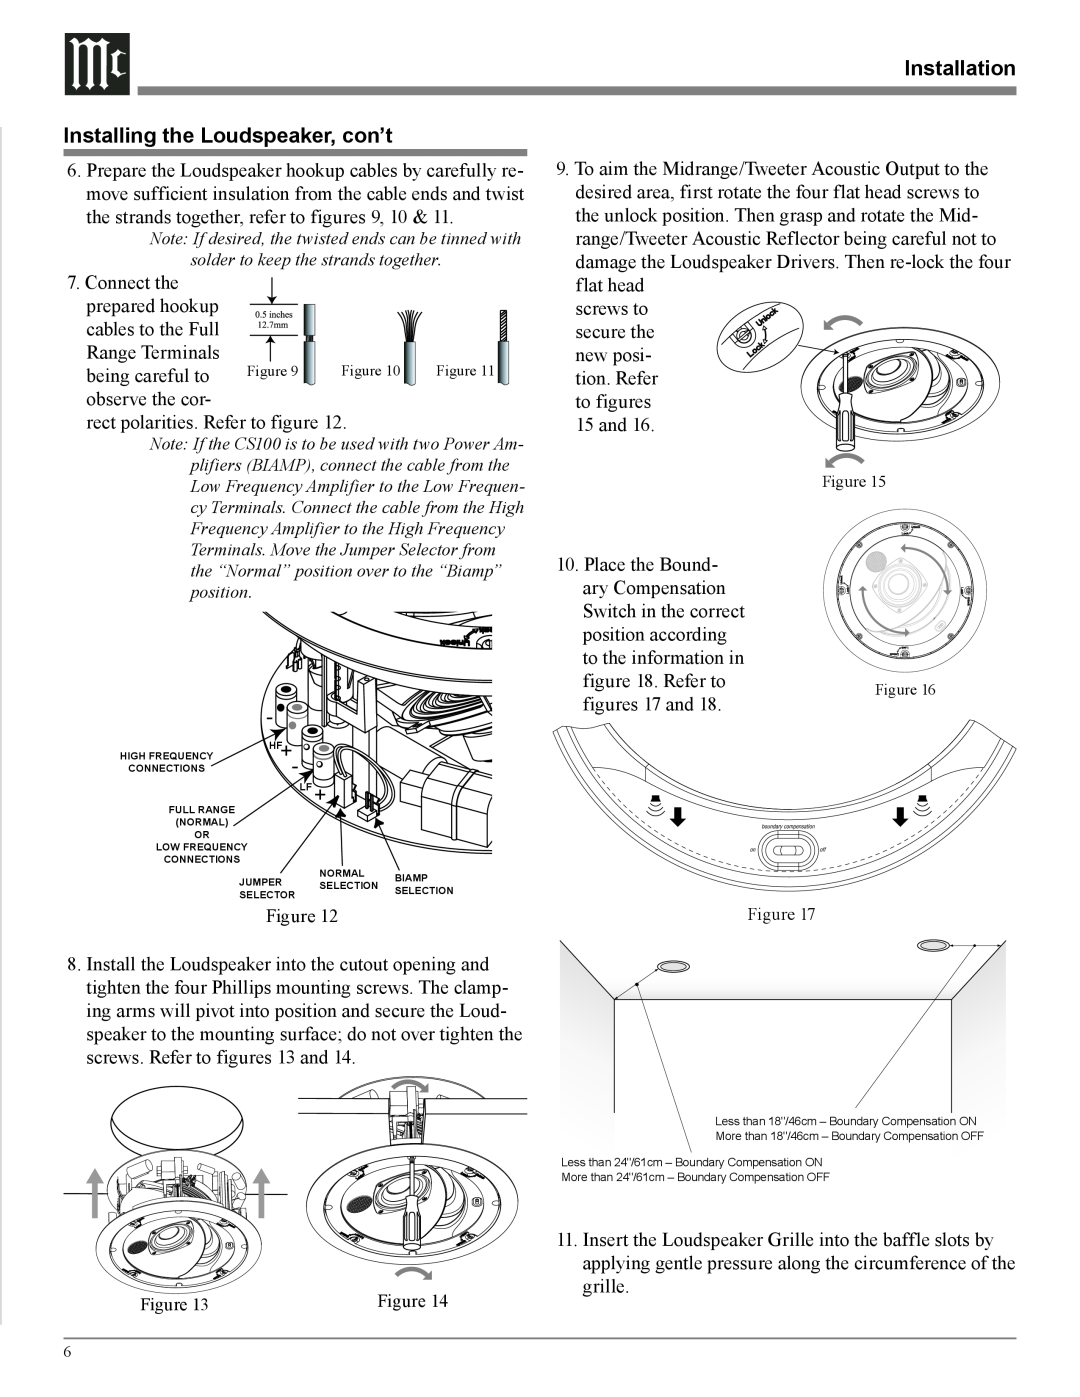 McIntosh CS100 manual Installation Installing the Loudspeaker, con’t 